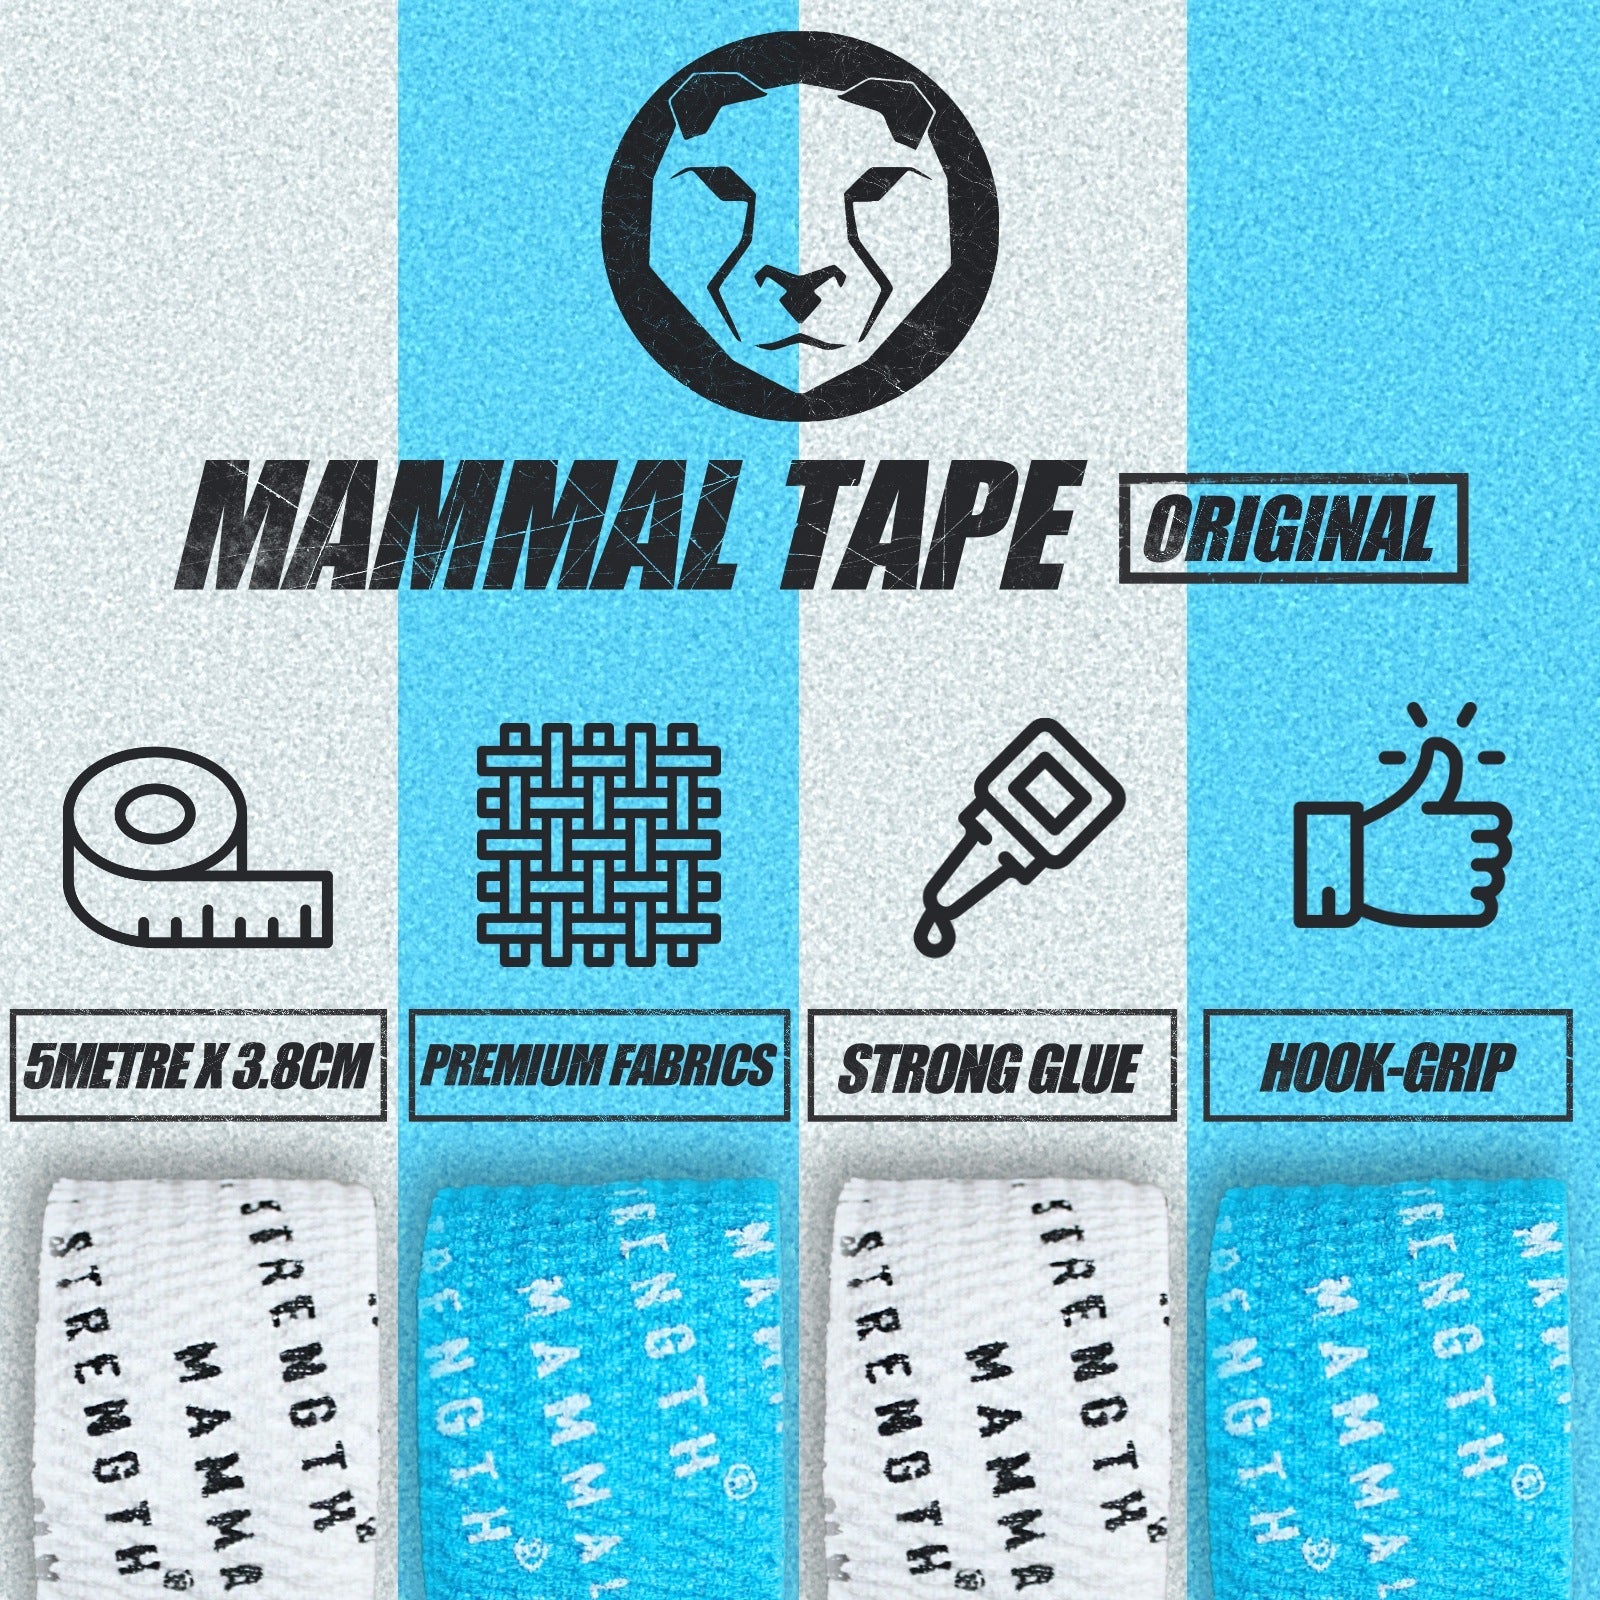 Mammal Tape - 5-Metre Rolls - Thumb &amp; Weightlifting Tape (BLUE / 4-PACK) - Mammal Strength